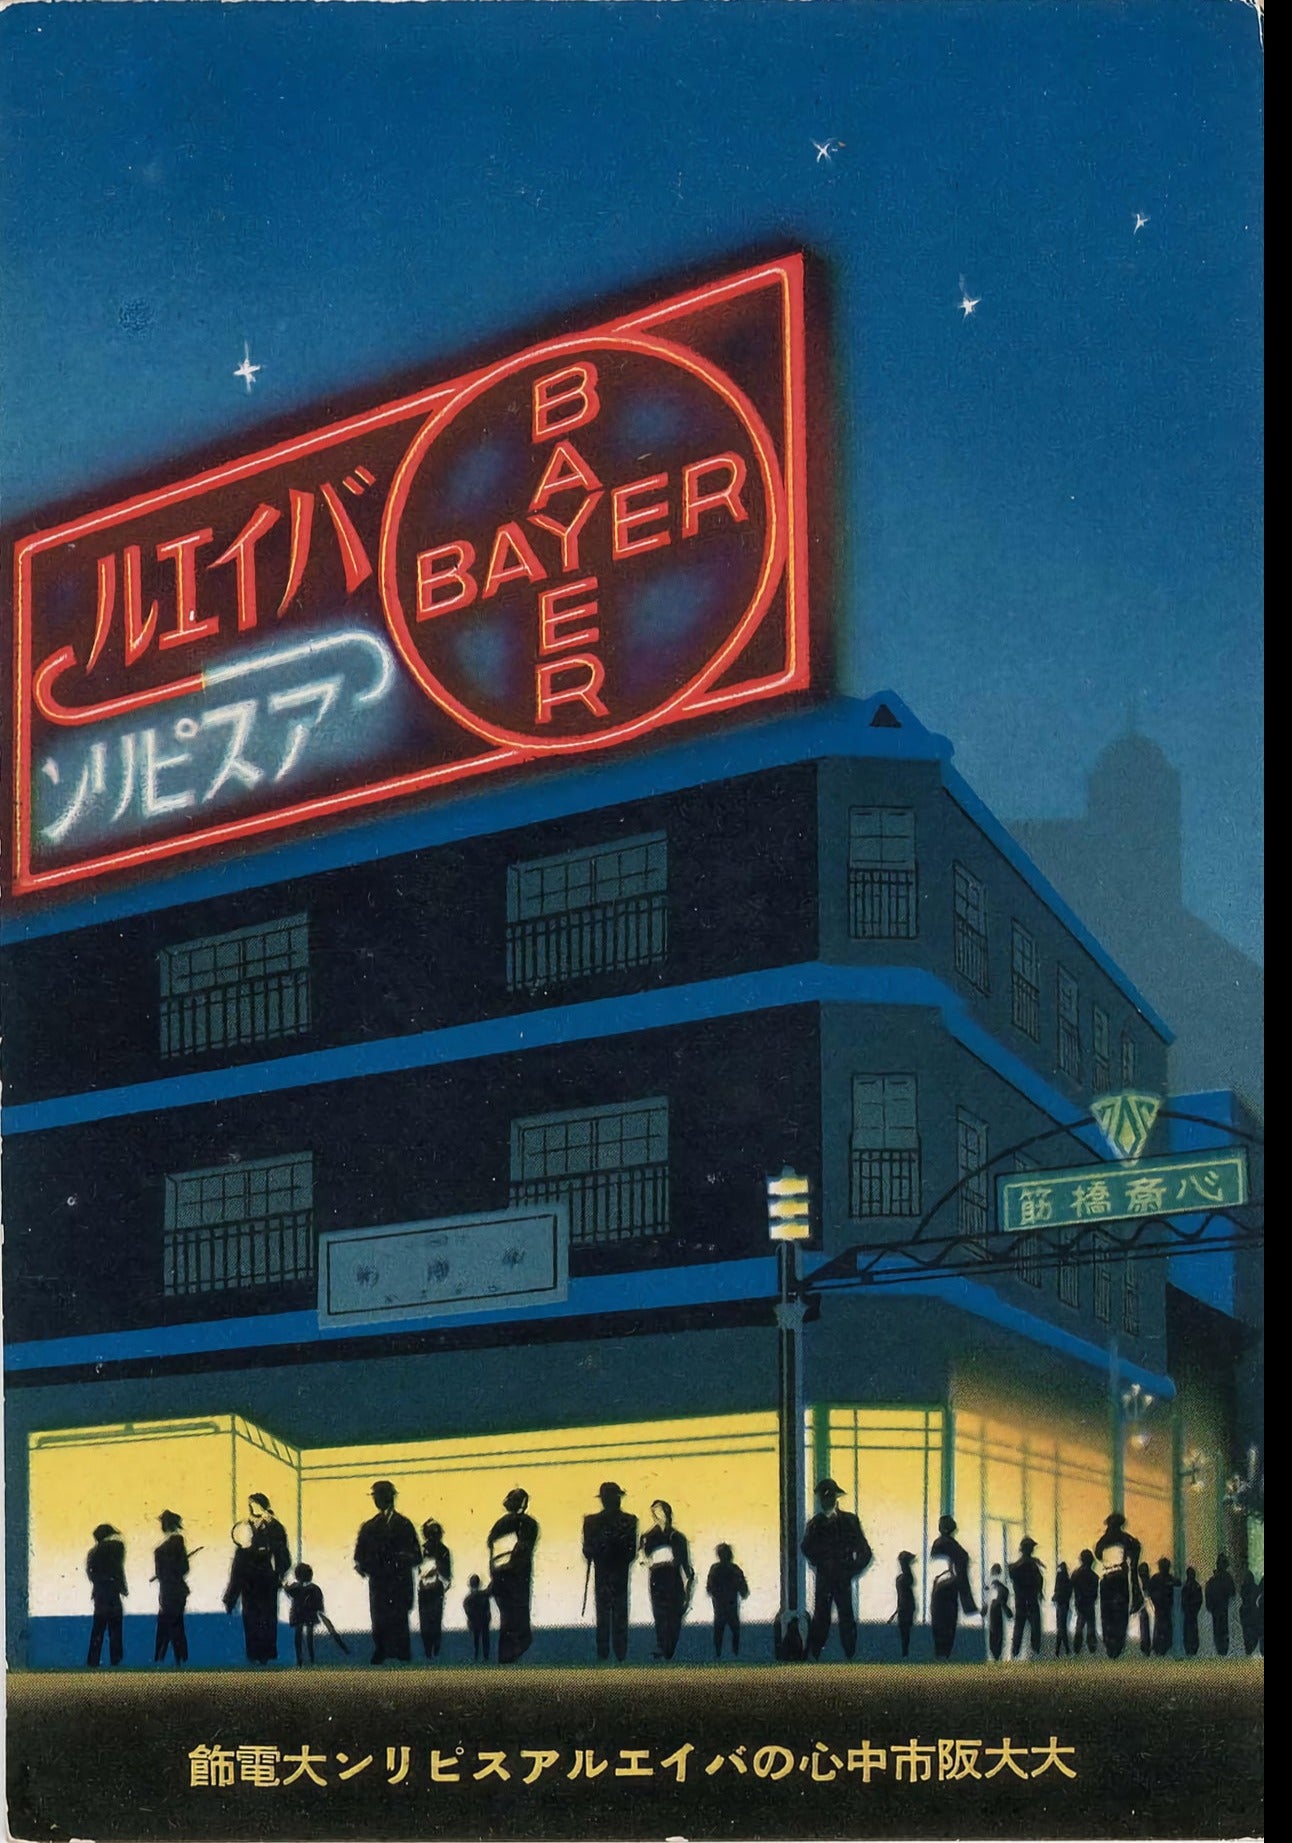 Enseigne lumineuse 'Bayer Aspirin' dans le centre d'Osaka, ch. 1930 - Carte postale 